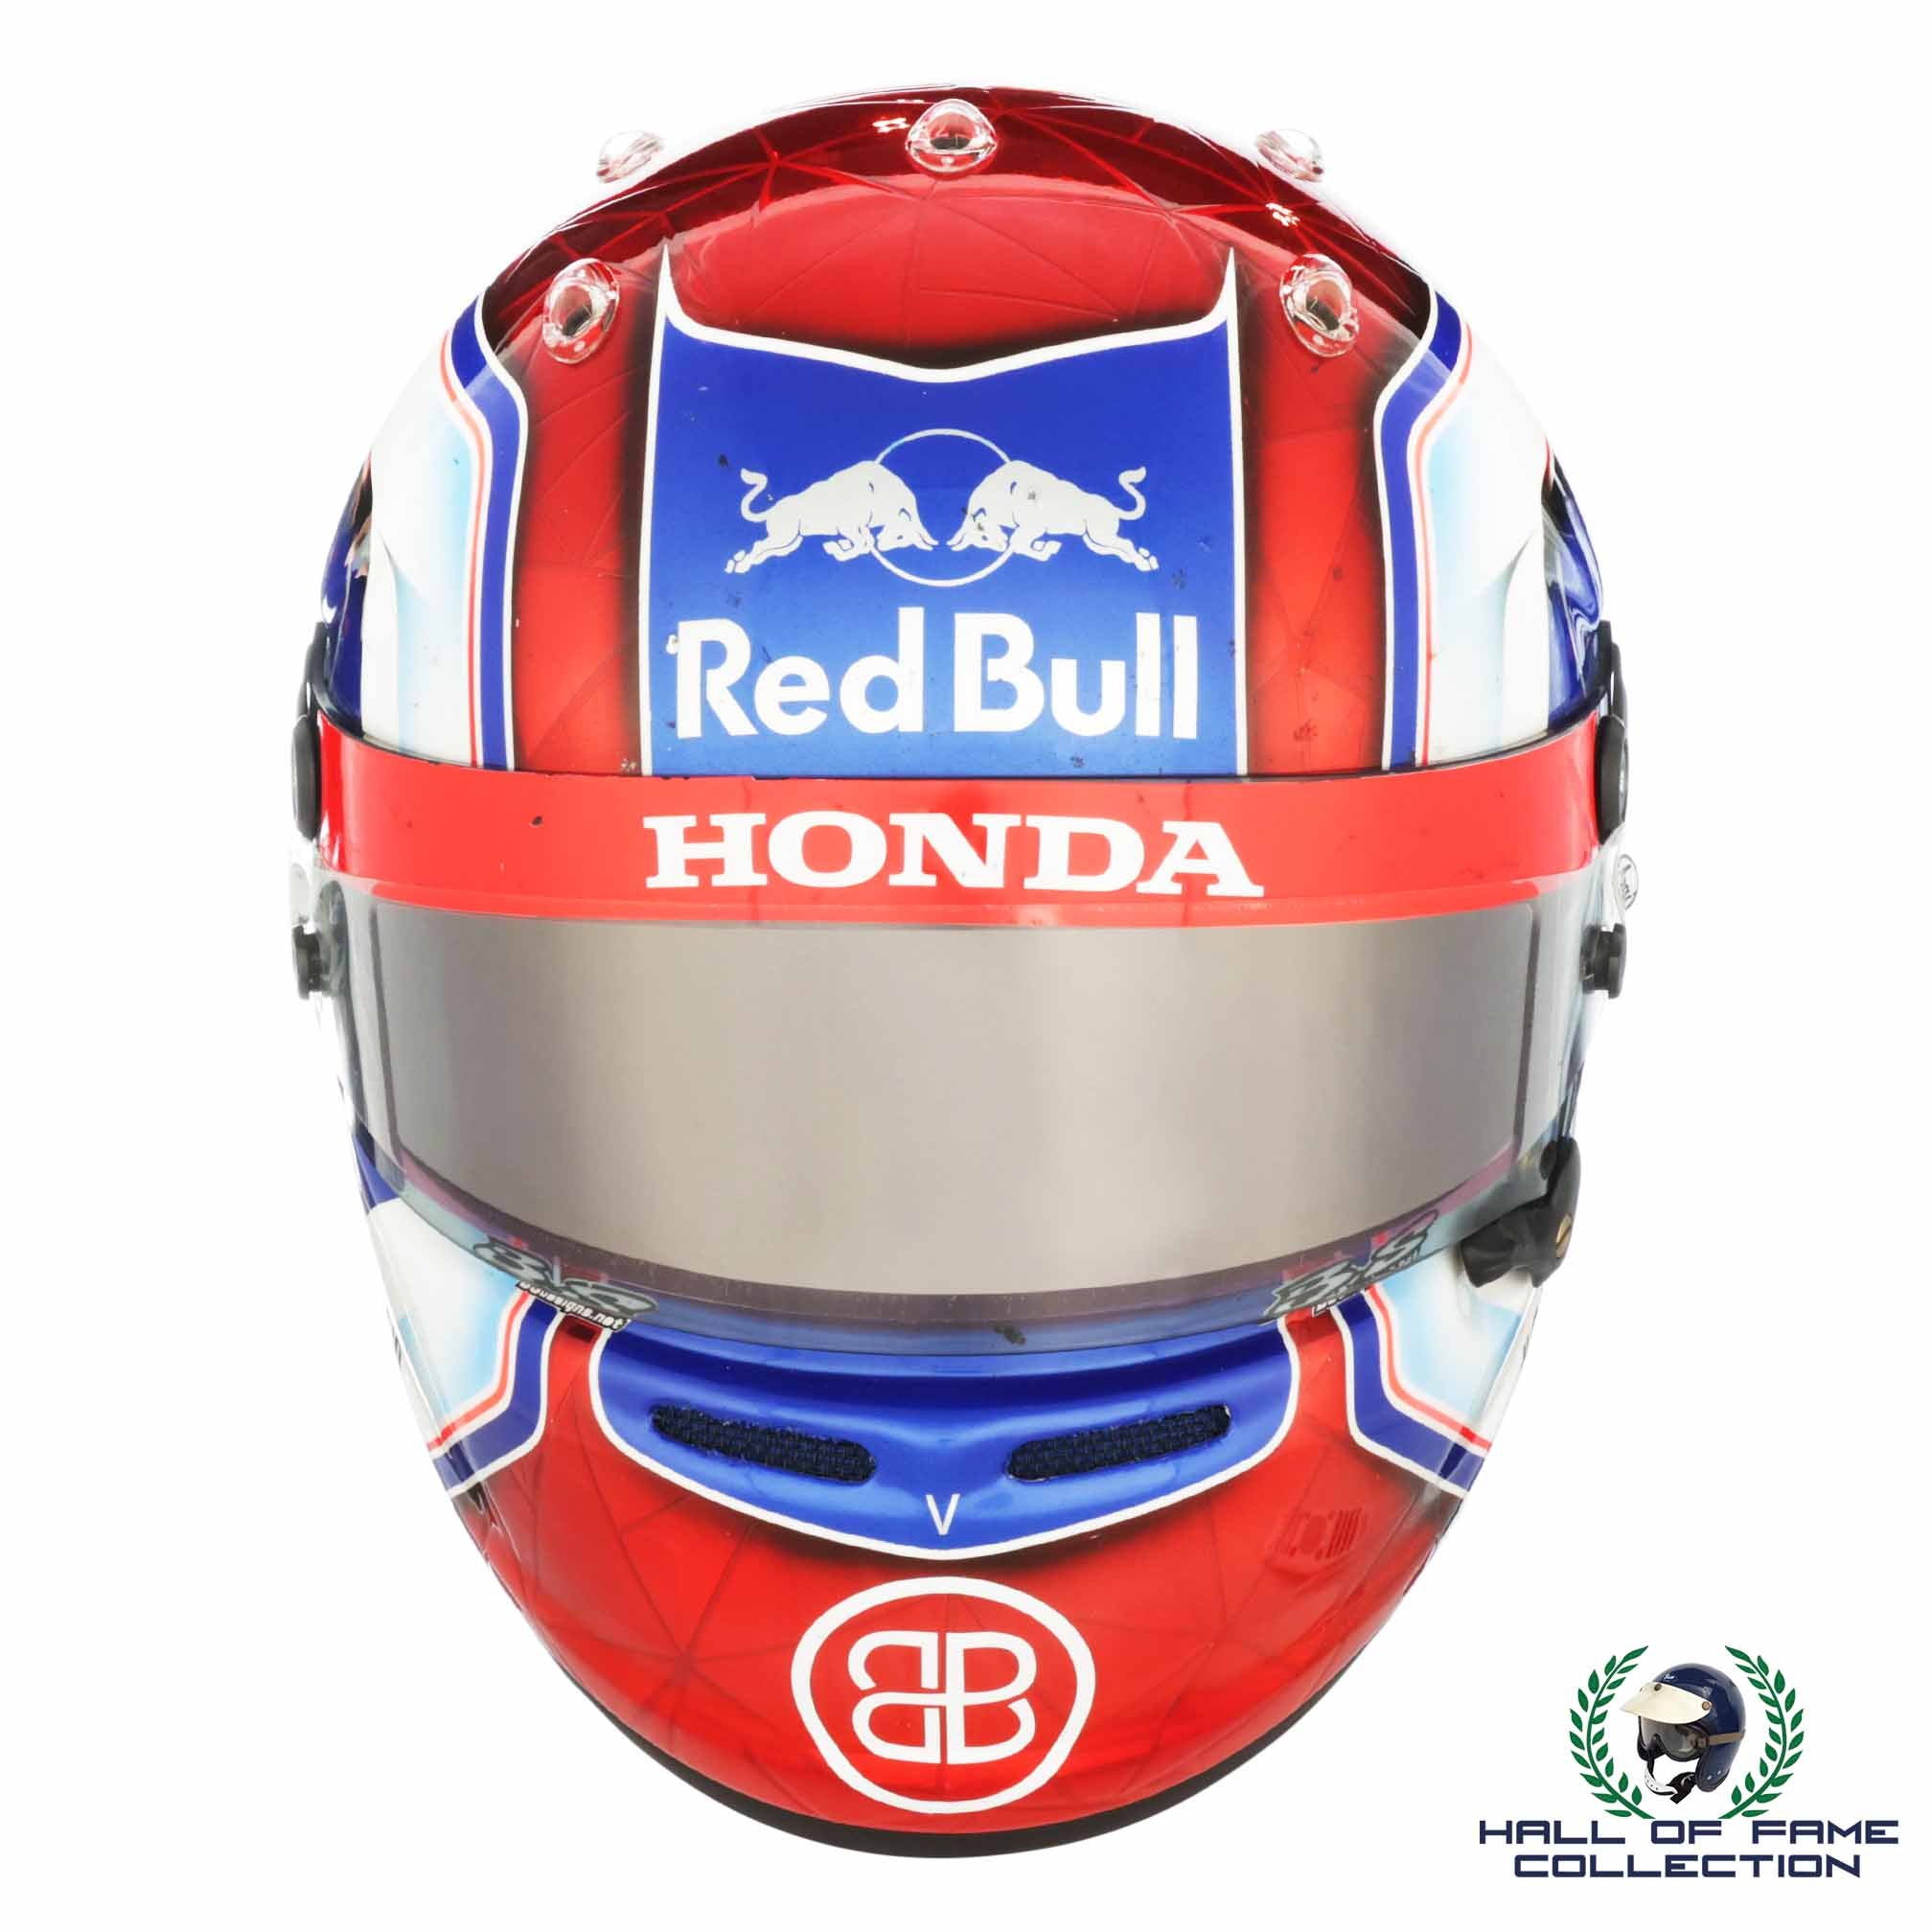 2019 Pierre Gasly Signed Abu Dhabi Race Used Scuderia Toro Rosso F1 Helmet